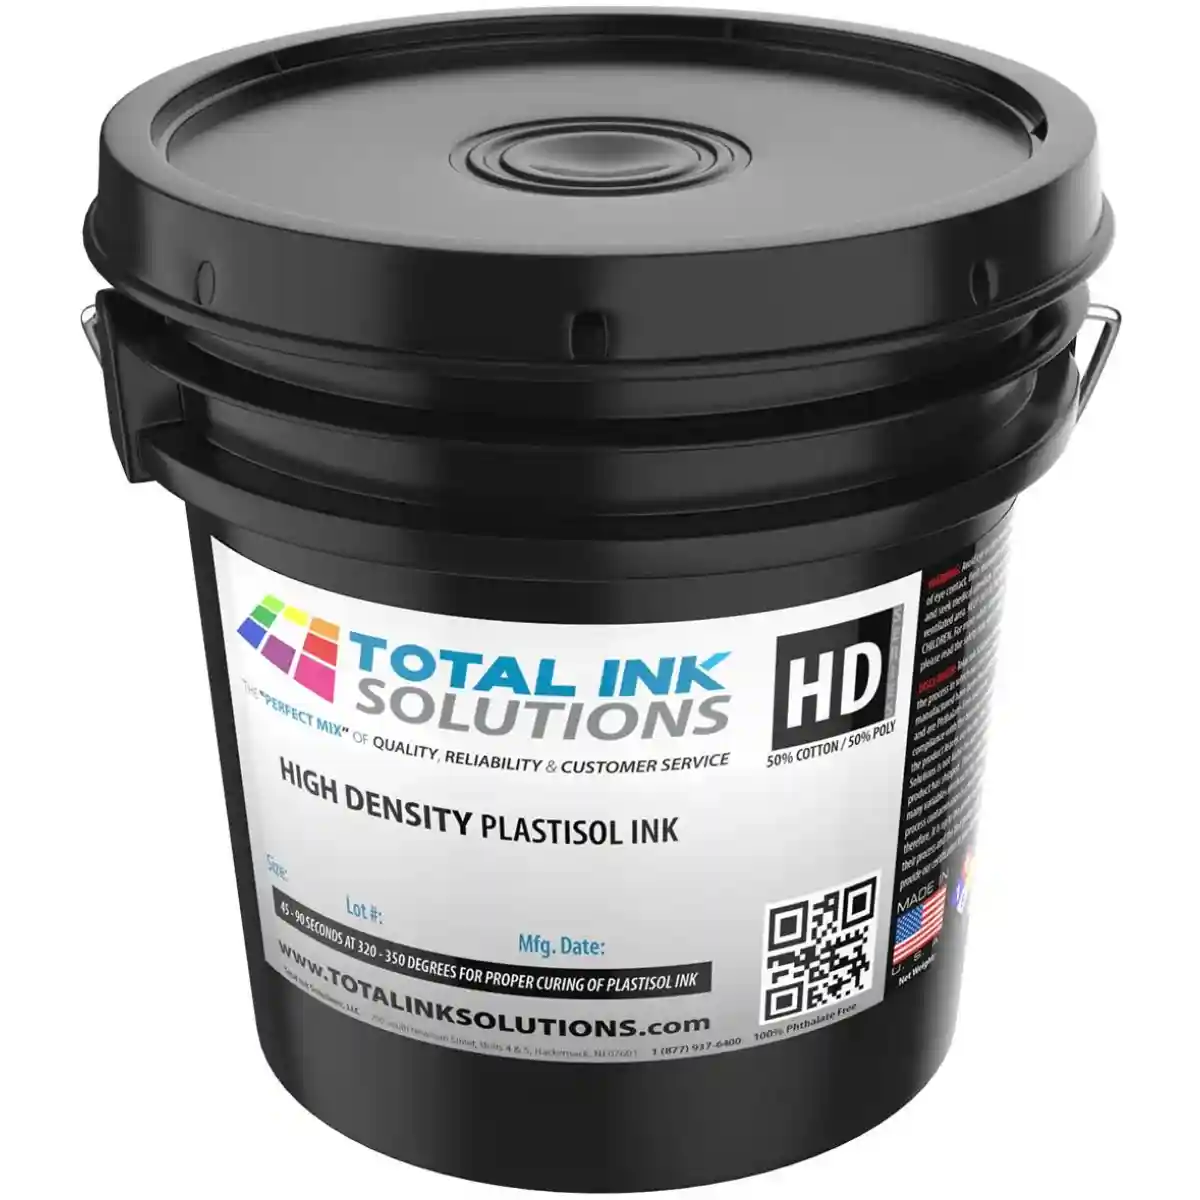 Plastisol Ink 3D High Density - Gallon TOTAL INK SOLUTIONS®